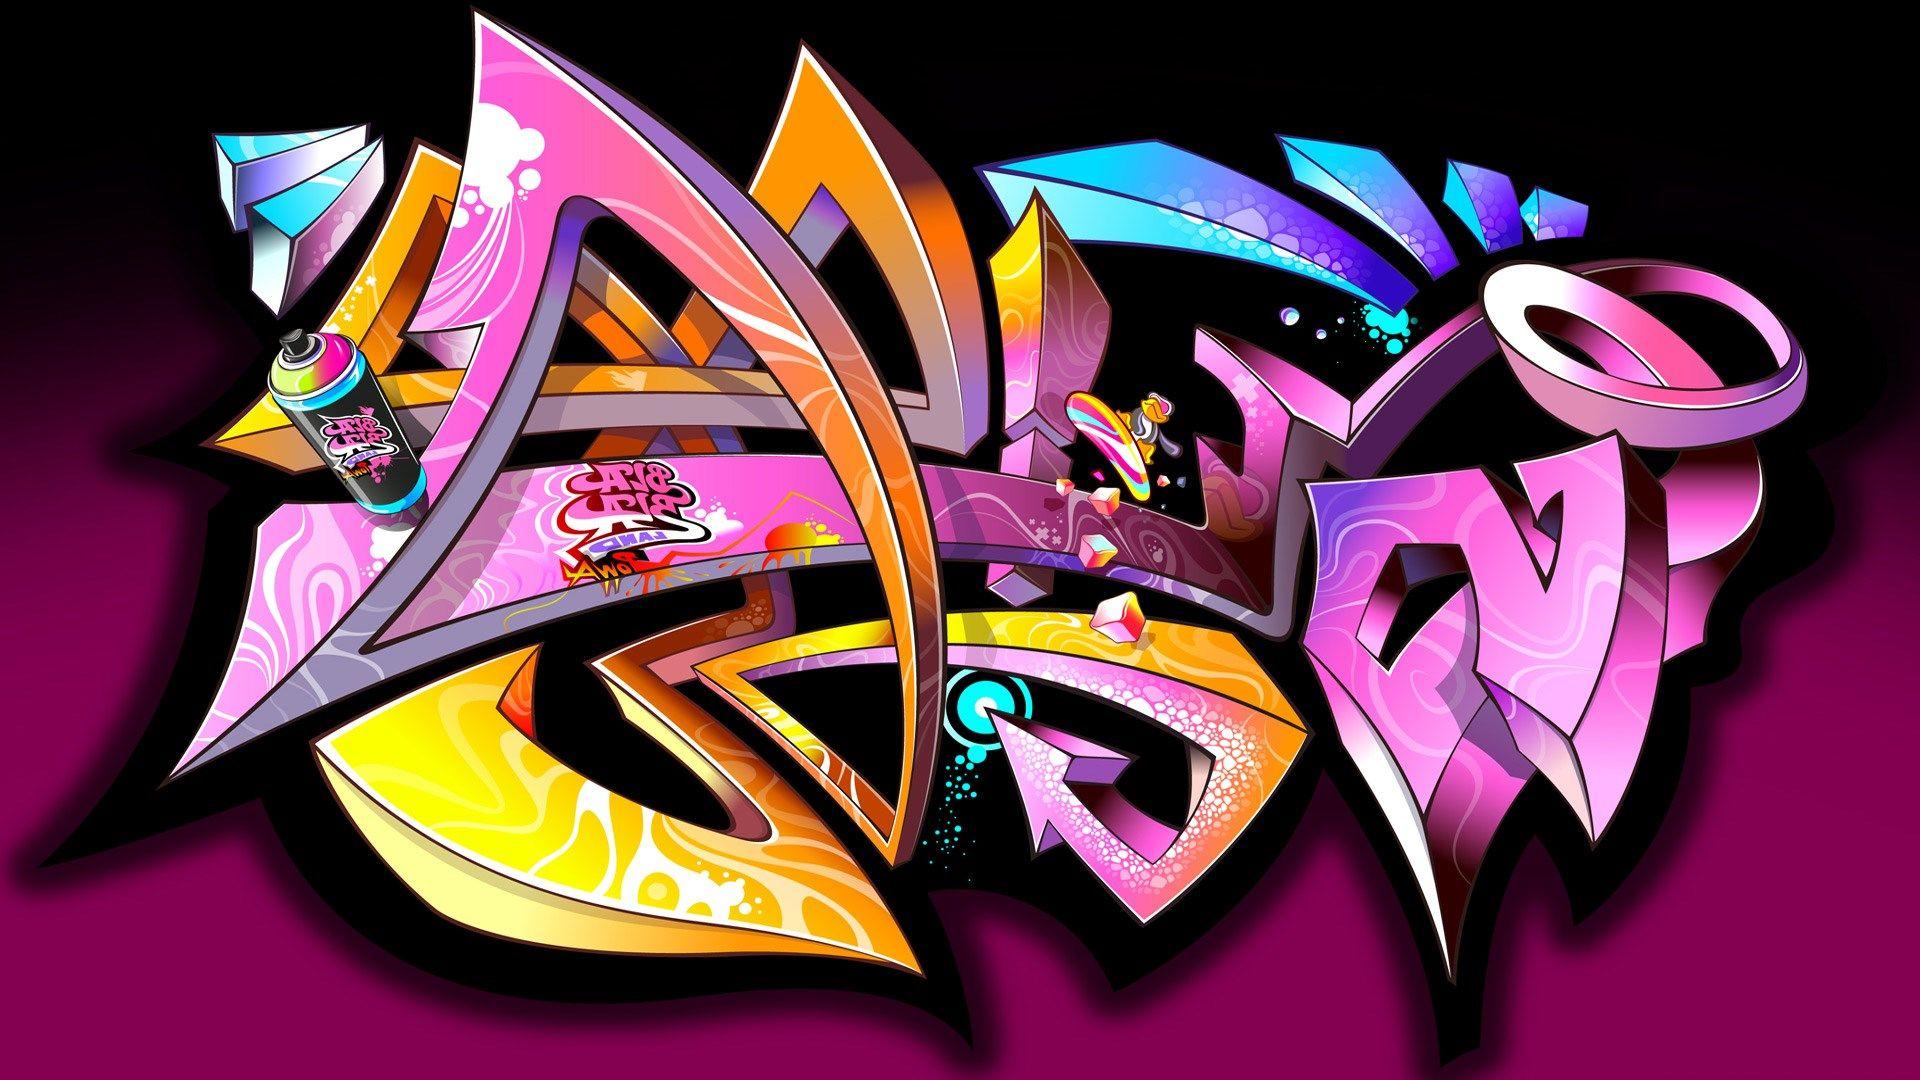 Wallpaper: Awesome HD Graffiti Wallpaper. HD Graffiti Wallpaper